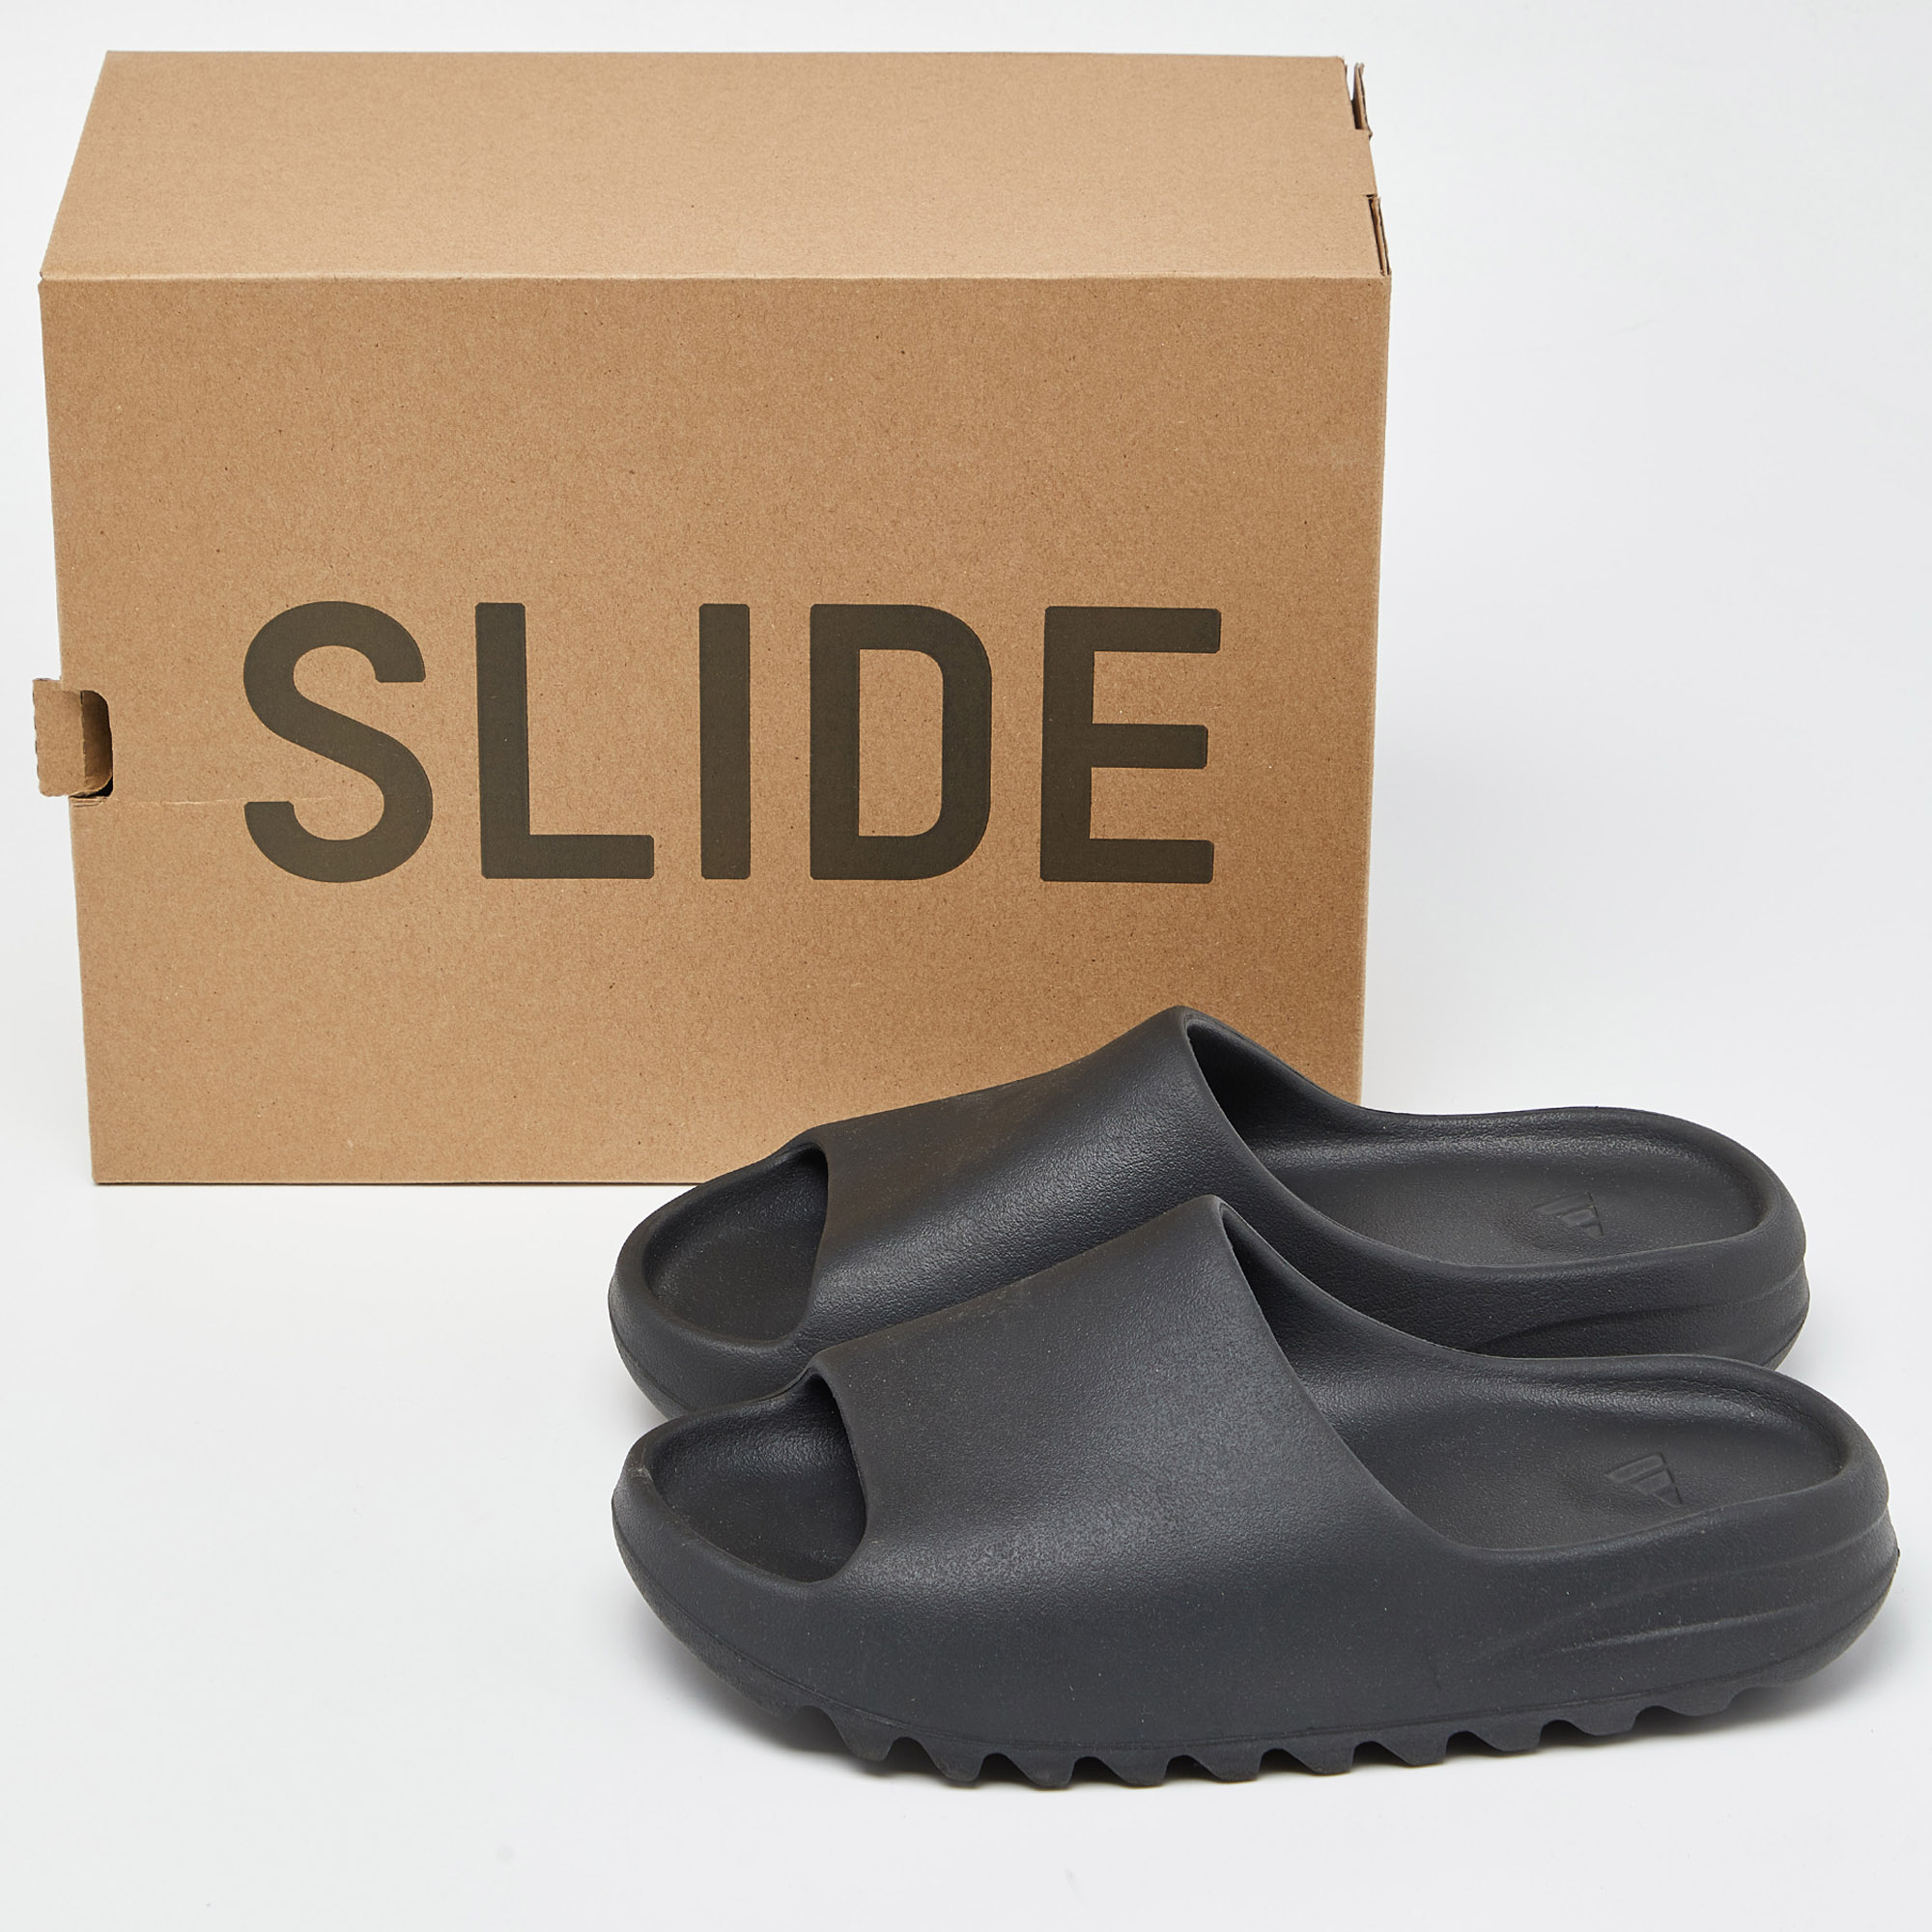 Yeezy X Adidas Black Rubber Onyx Flat Slides Size 43